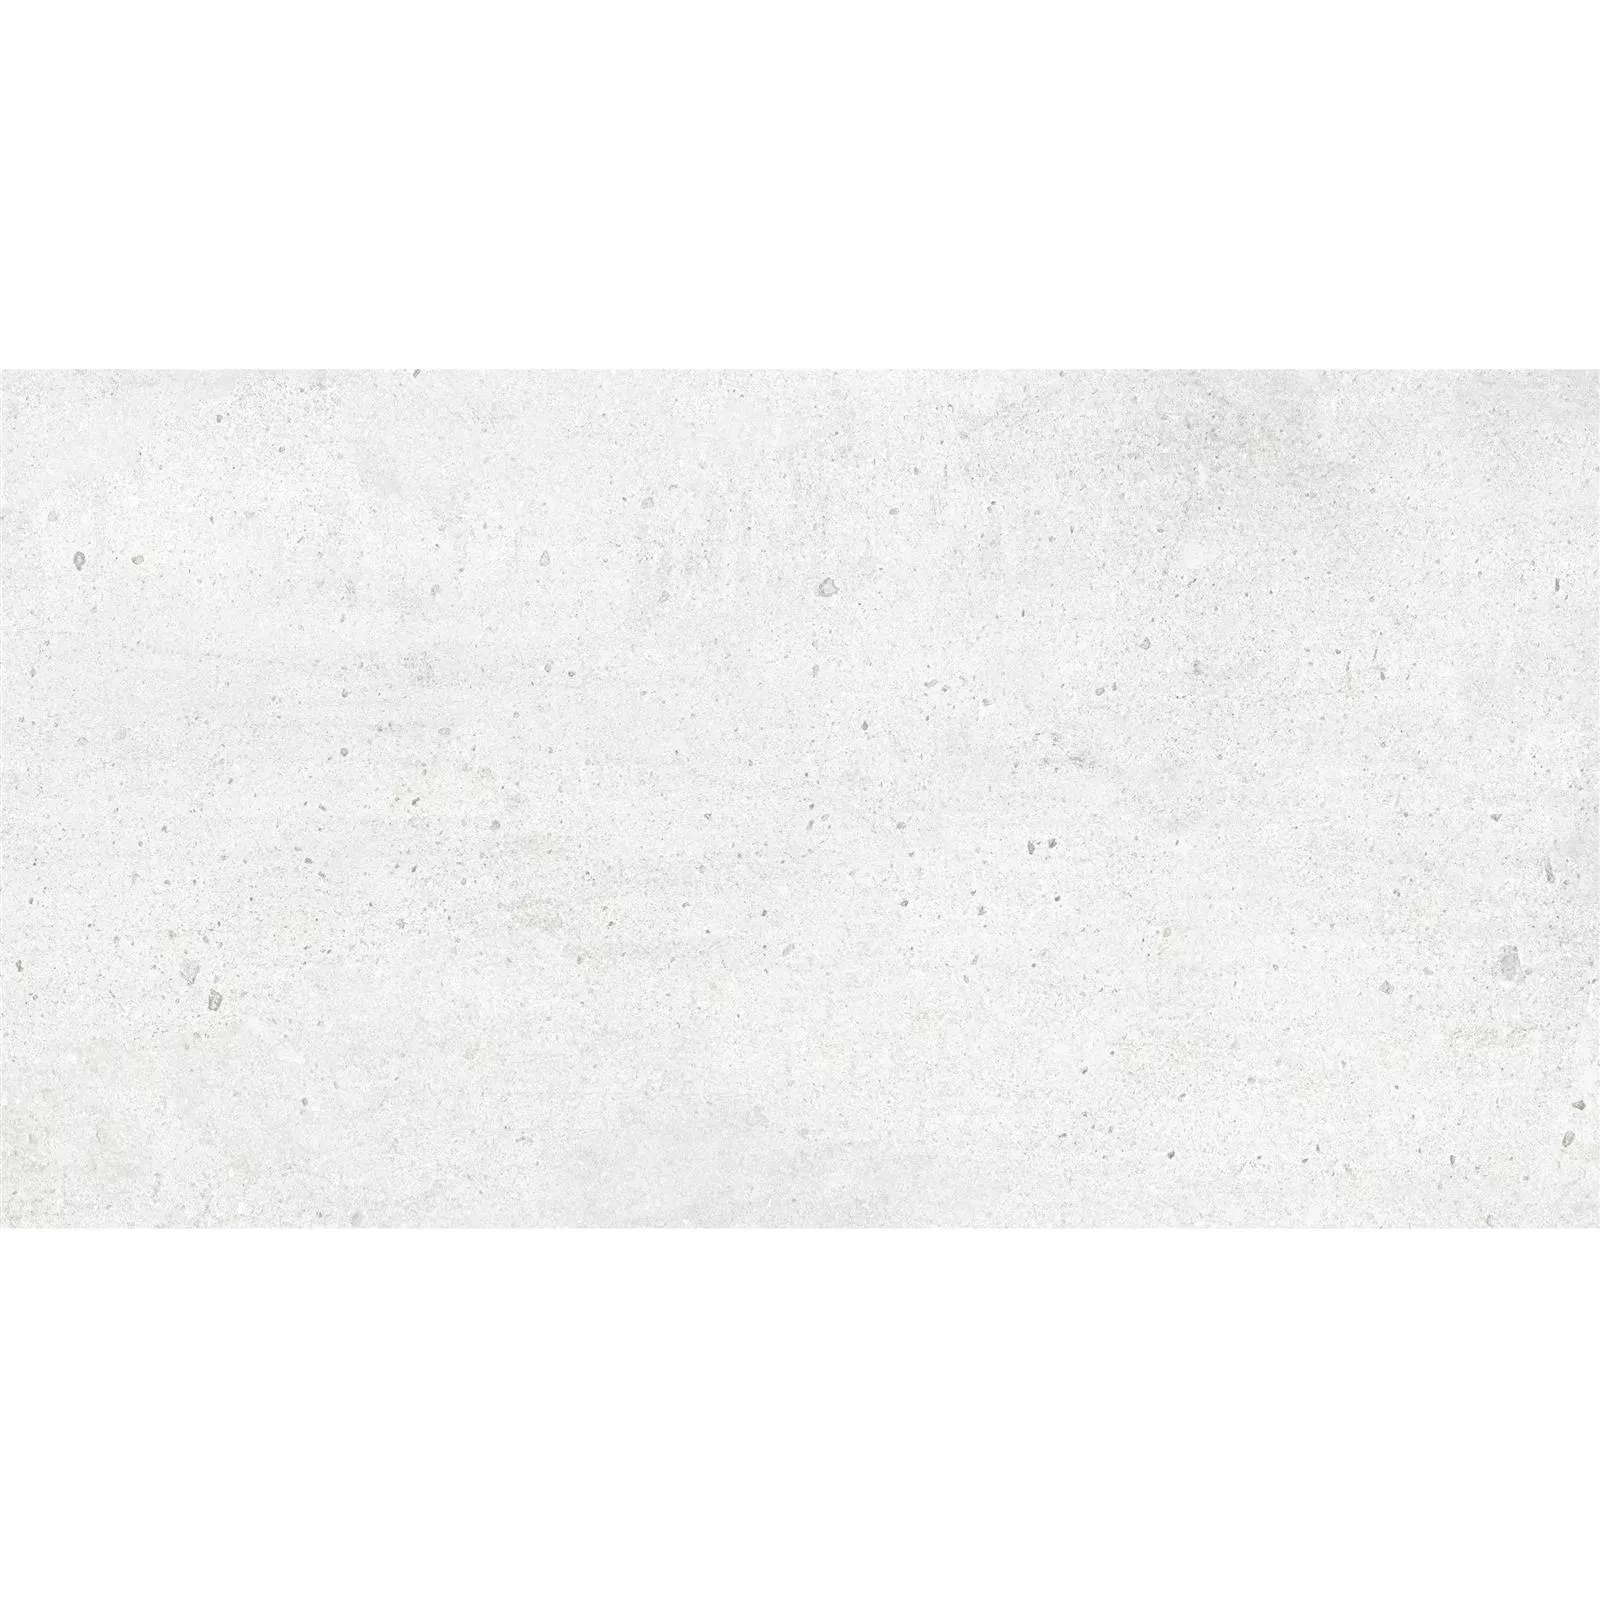 Podlahové Dlaždice Freeland Kámen Vzhled R10/B Bílá 30x60cm